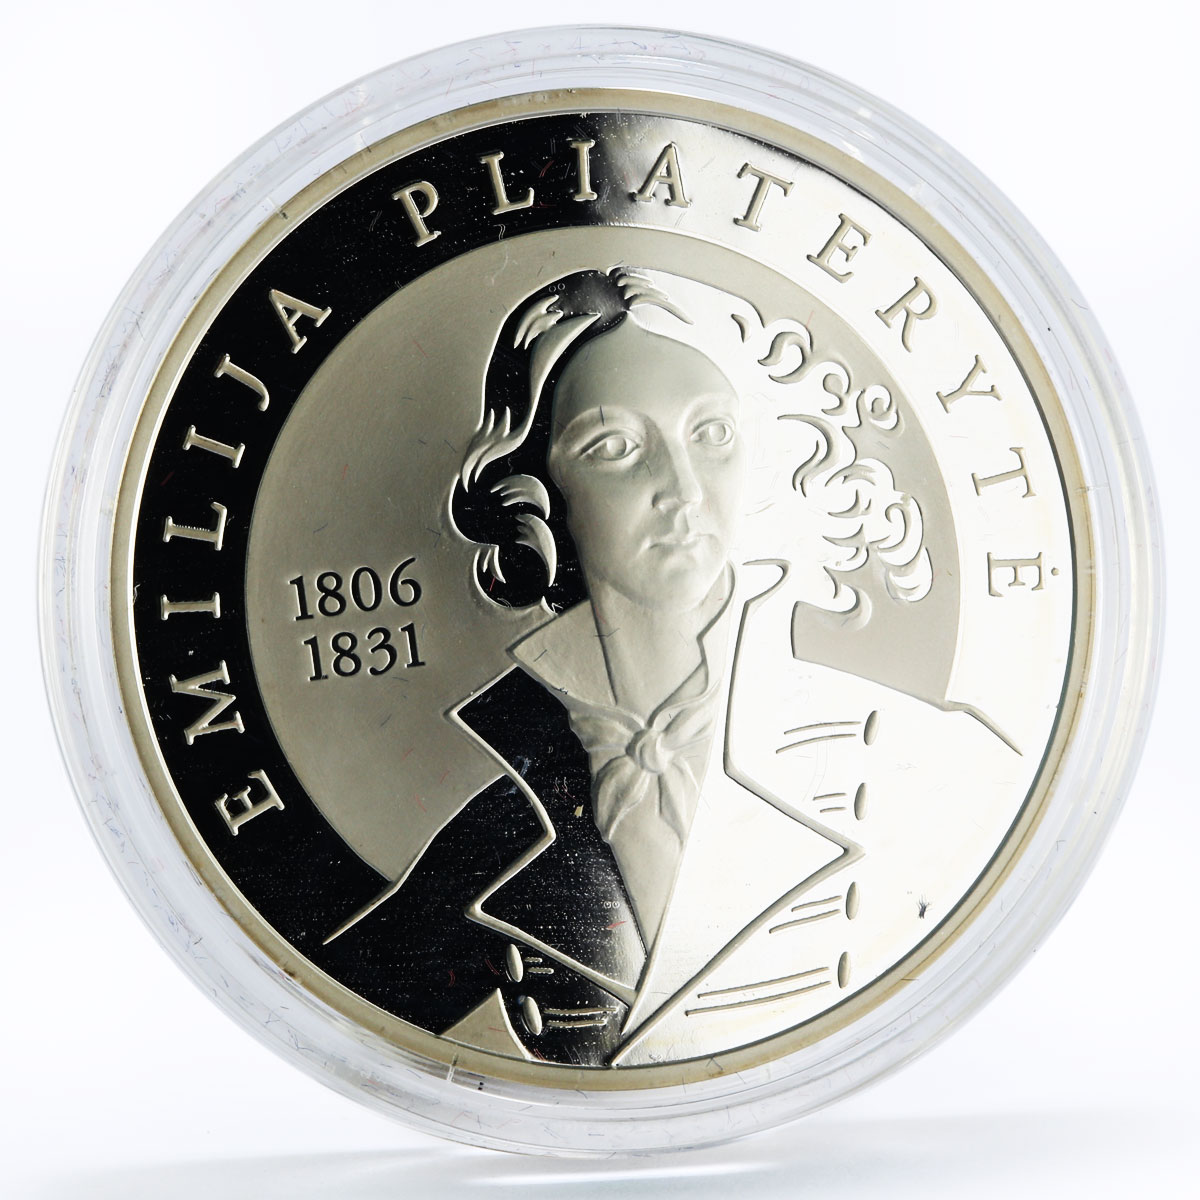 Lithuania 50 litu 200th Anniversary of Emilija Pliateryte proof silver coin 2006